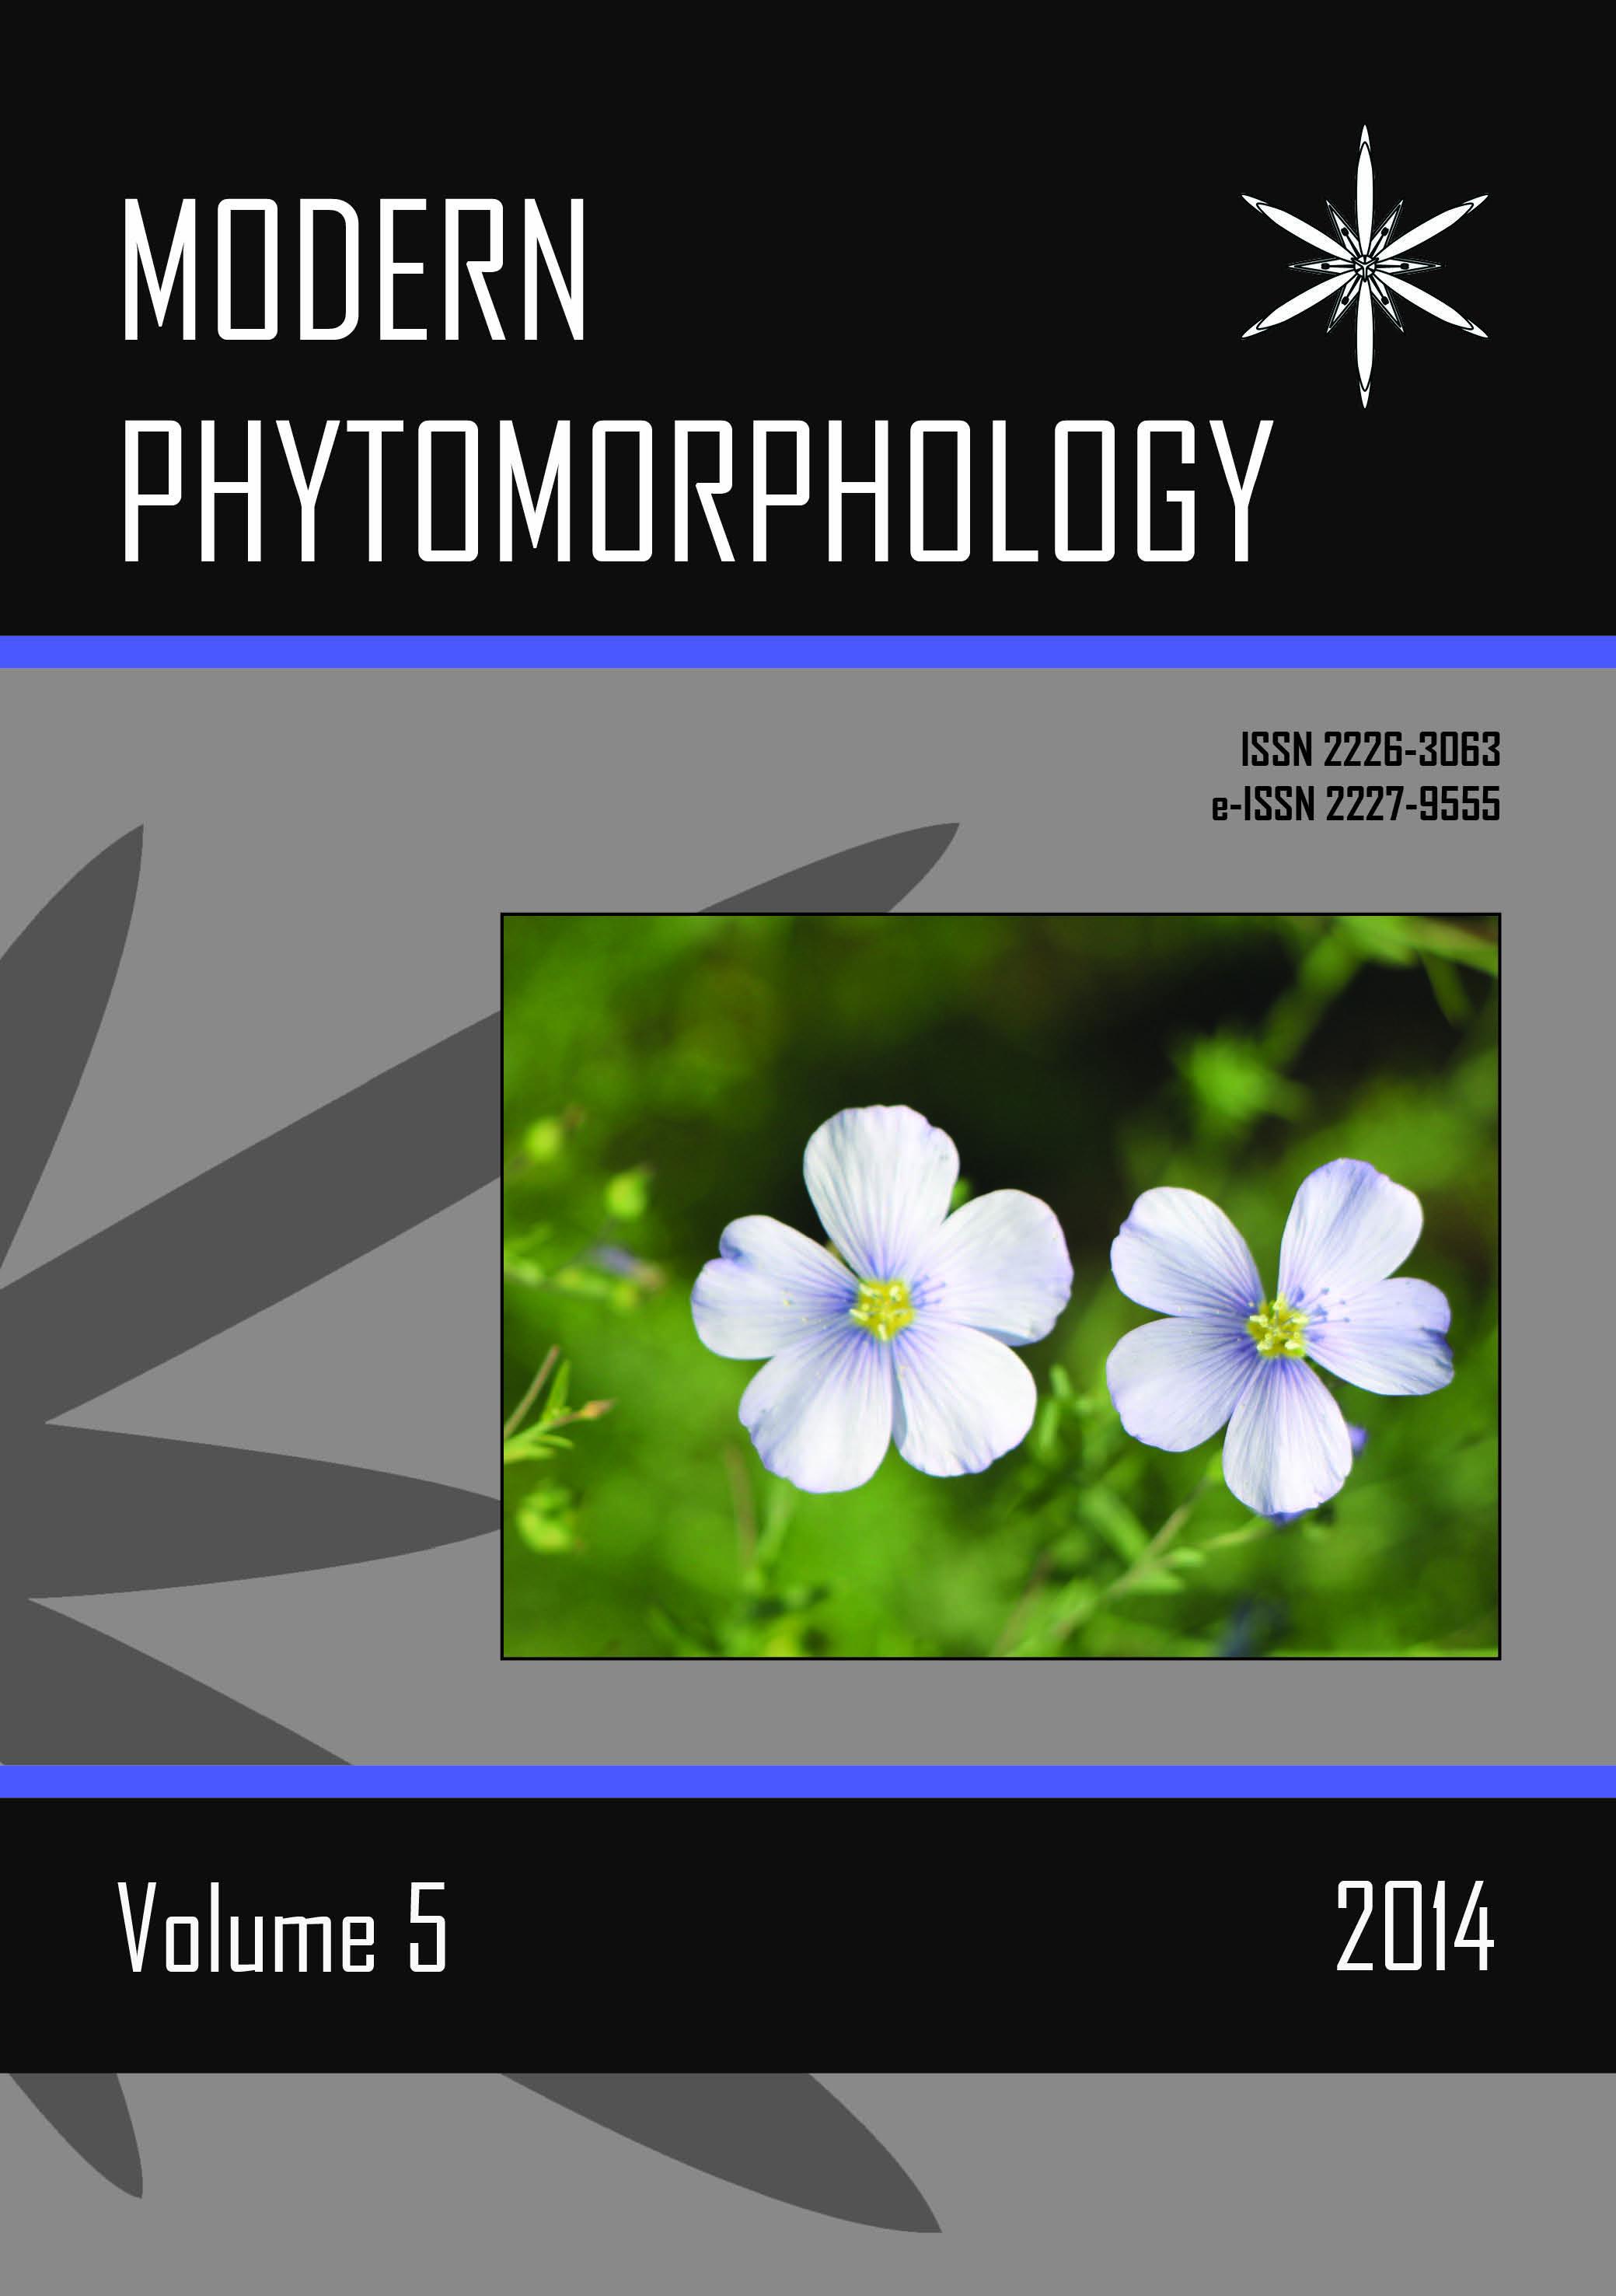 Modern Phytomorphology cover, Vol. 5